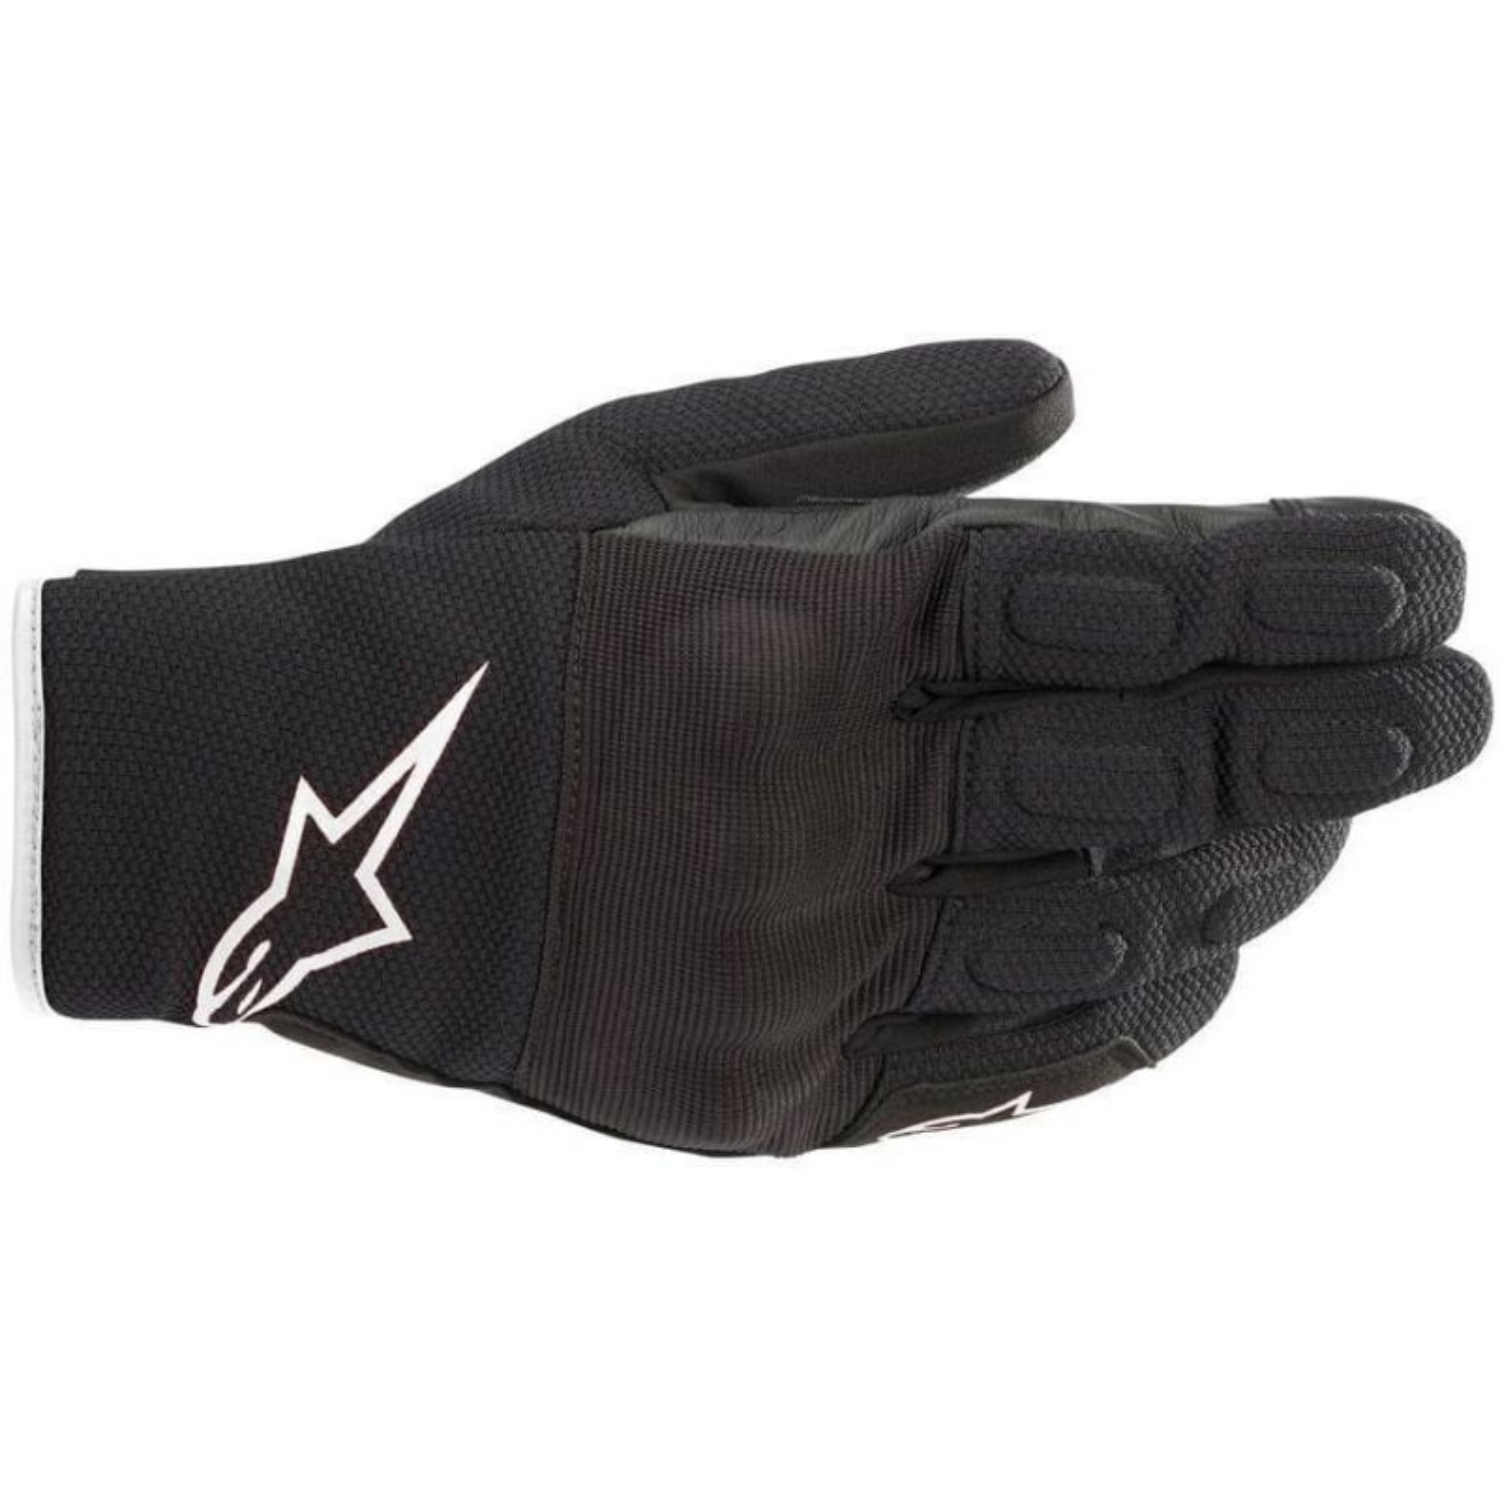 Image of Alpinestars S Max Drystar Gloves Black White Size L ID 8059175098956